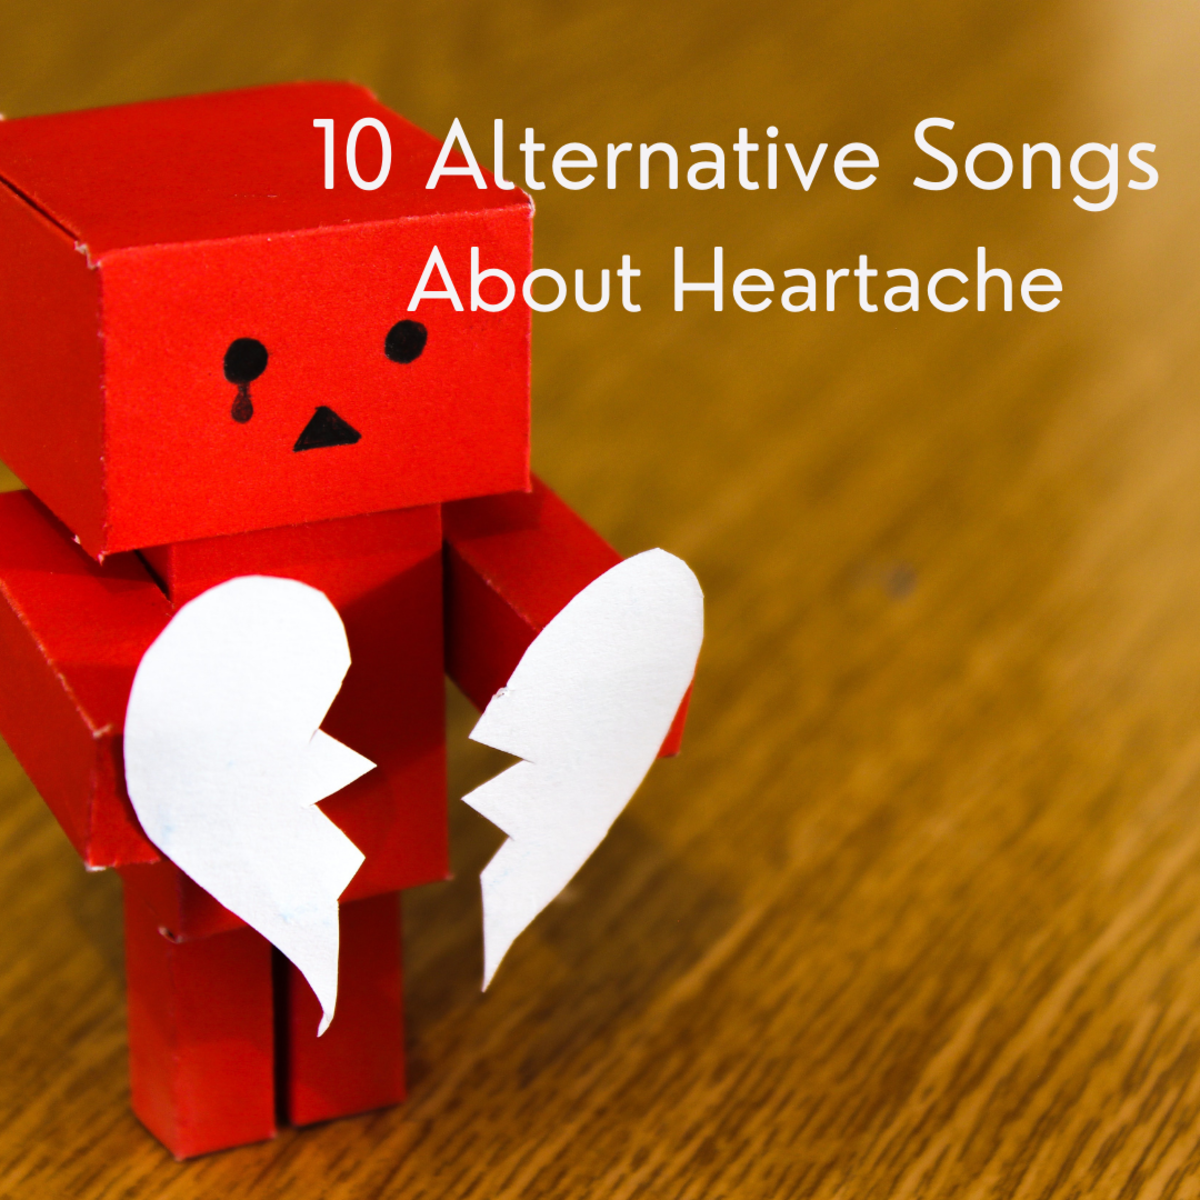 10 Alternative Songs About Heartache